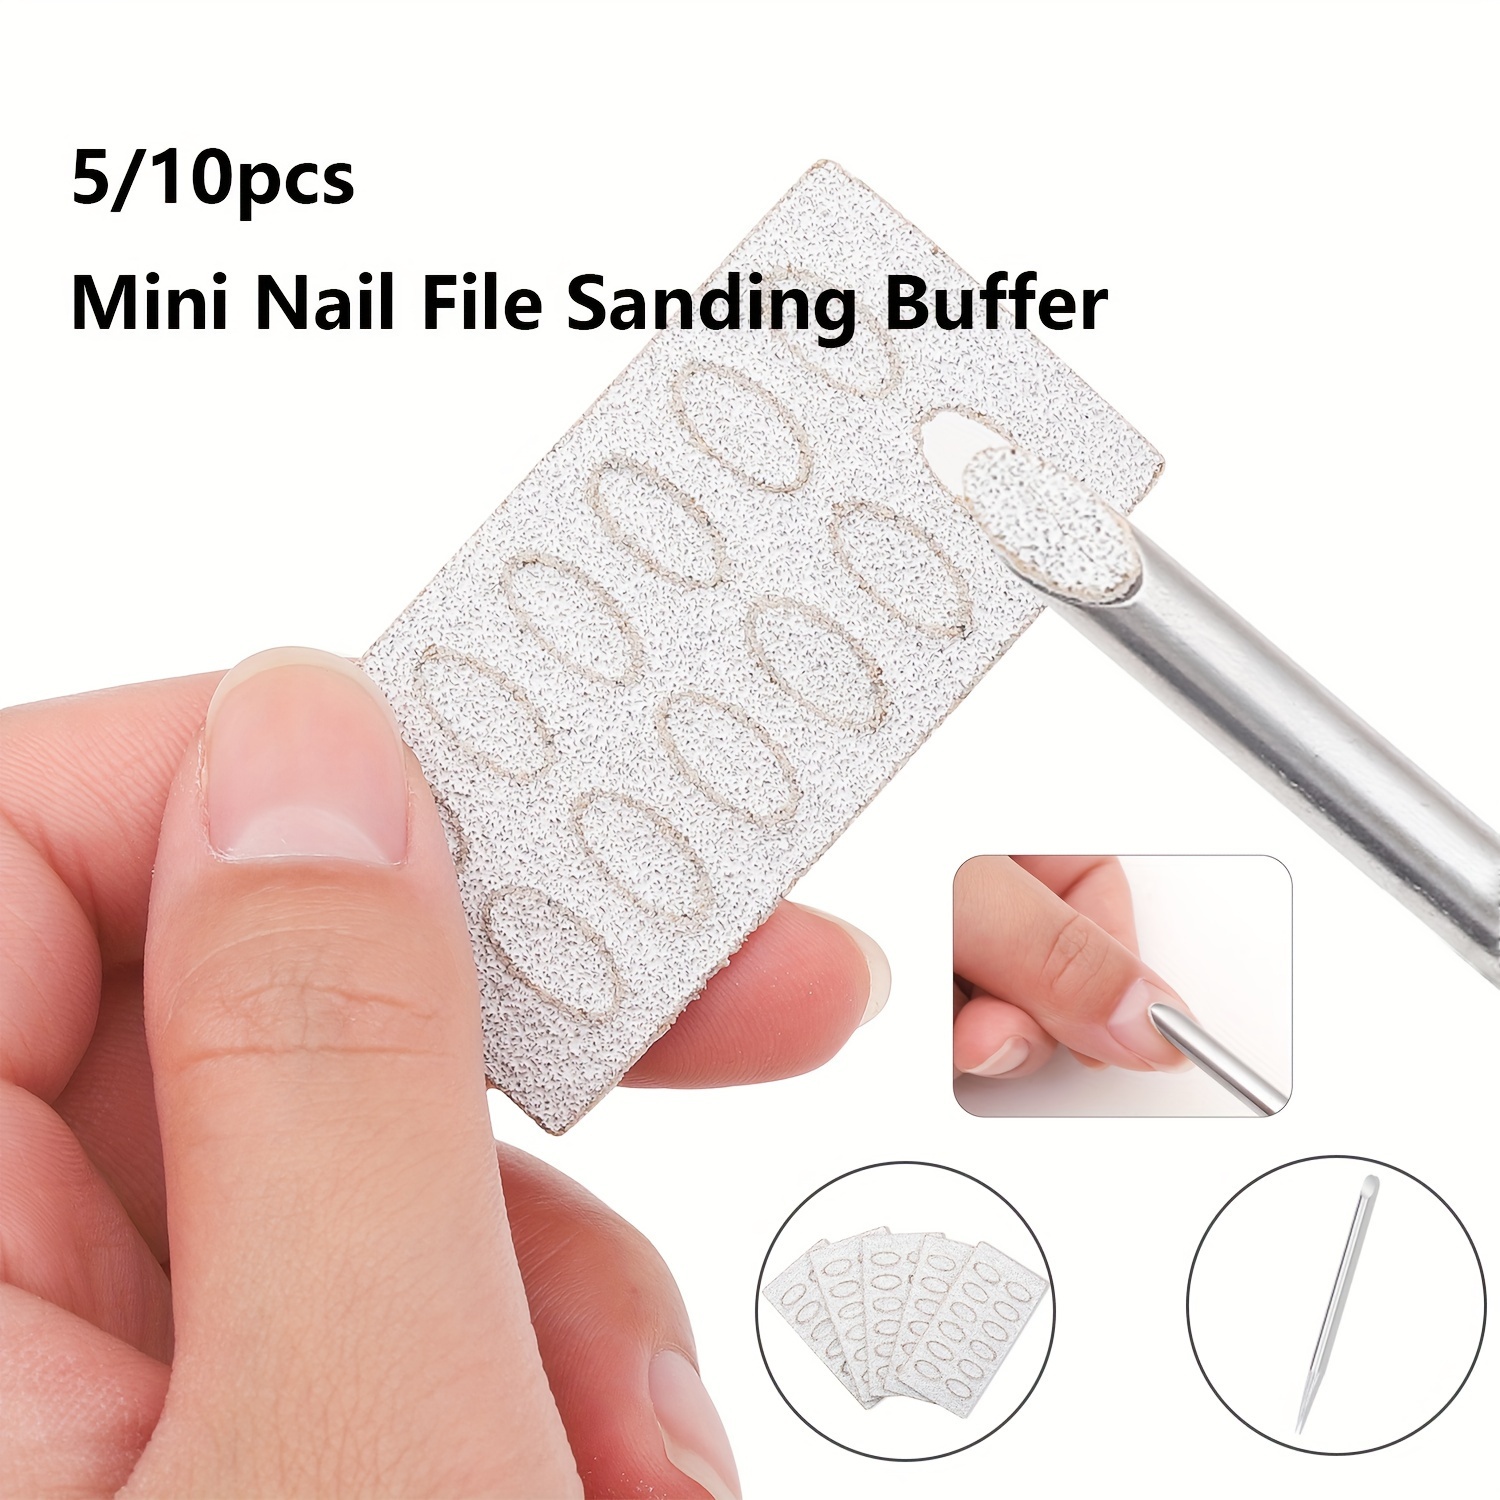 5 Pcs Nail Art Files Dust Brush Cleaning Buffer Sponge Block Buffing Grit  Sand Uv Gel Polish Acrylic Manicure Pedicure Tools